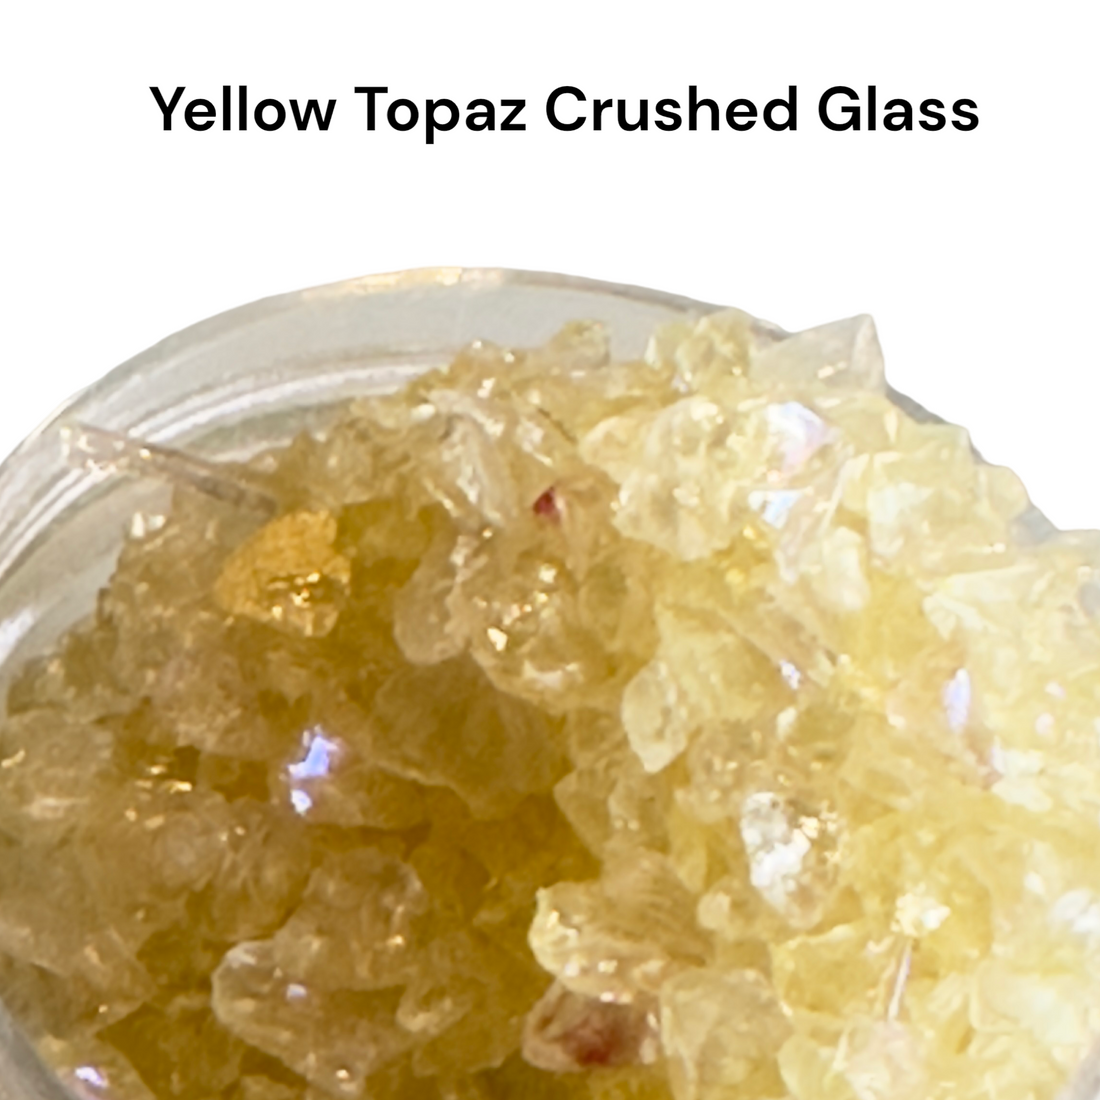 Yellow Topaz Crushed Glass